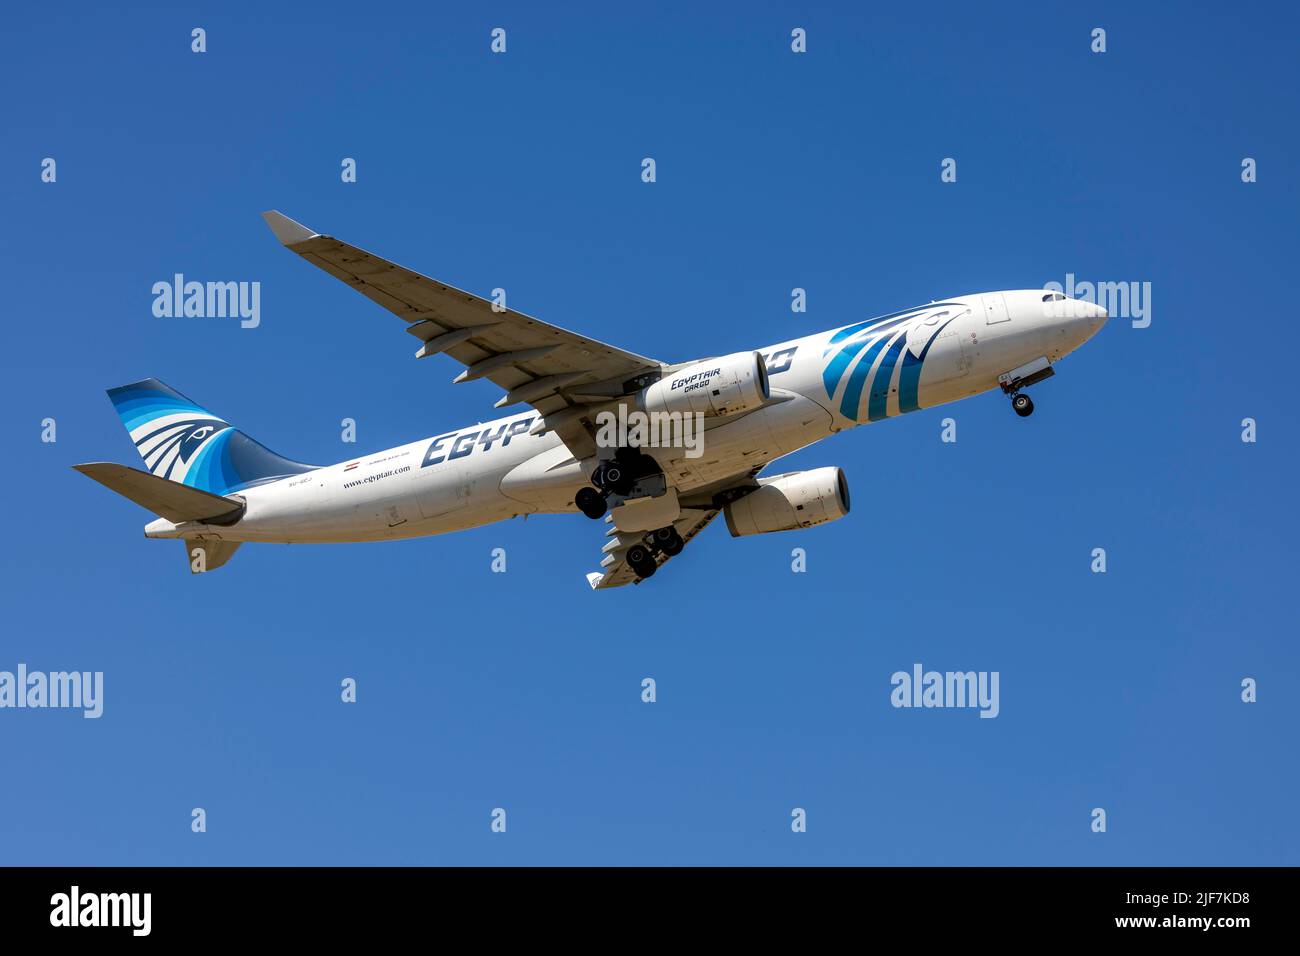 EgyptAir Cargo Airbus A330-243(P2F) (REG: SU-GCJ) taking off from runway 13. Stock Photo